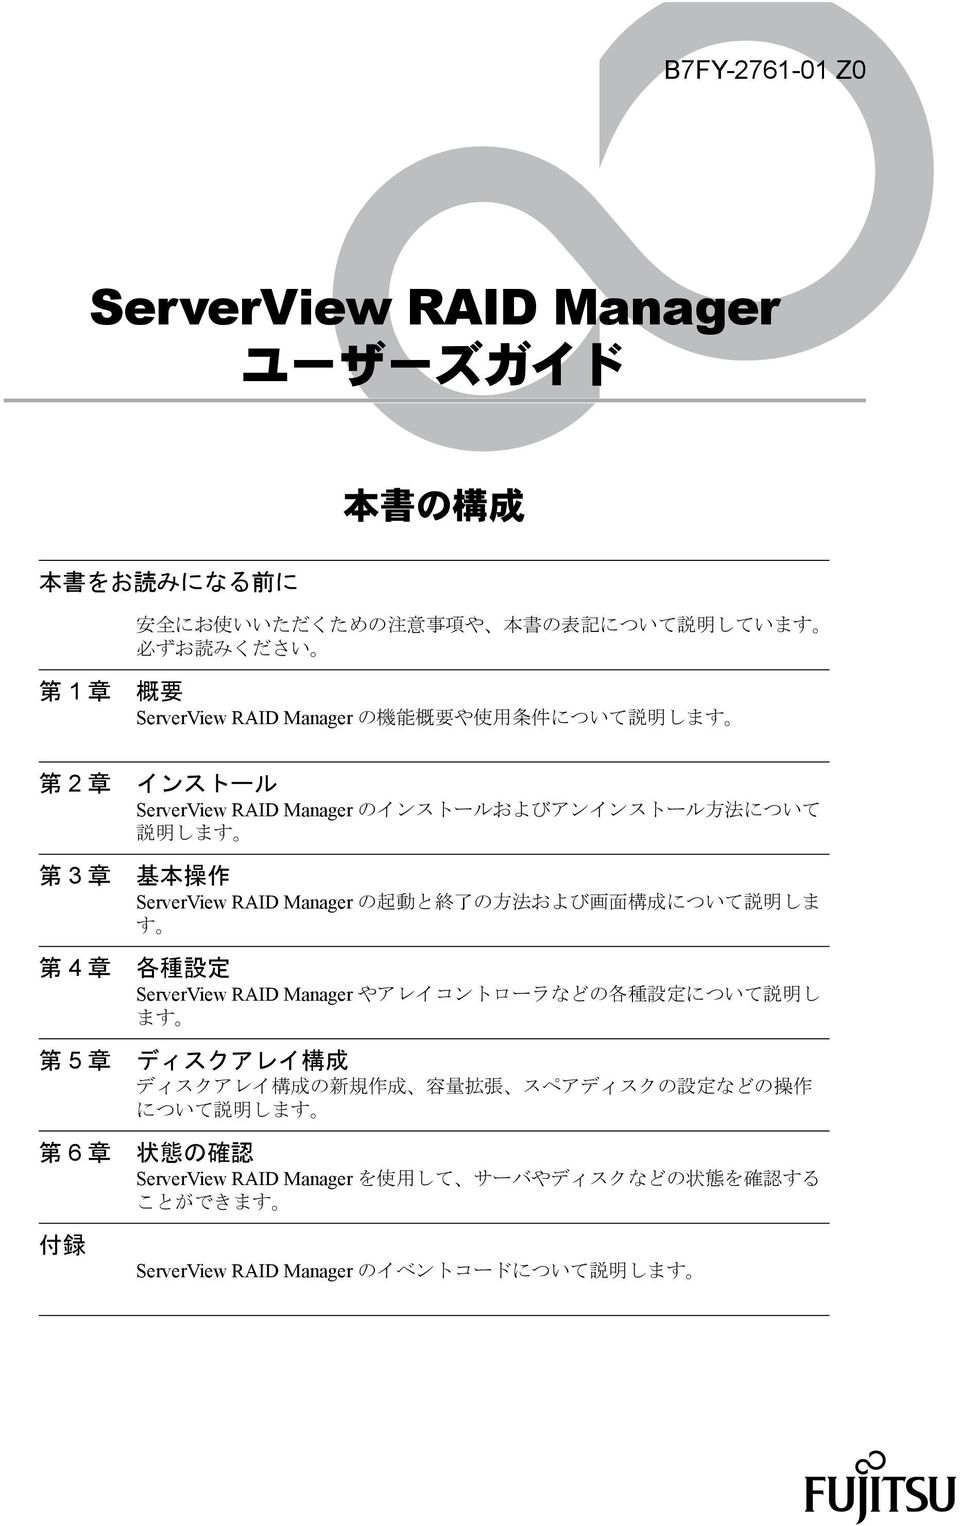 ServerView RAID Manager の 起 動 と 終 了 の 方 法 および 画 面 構 成 について 説 明 しま す 各 種 設 定 ServerView RAID Manager やアレイコントローラなどの 各 種 設 定 について 説 明 し ます ディスクアレイ 構 成 ディスクアレイ 構 成 の